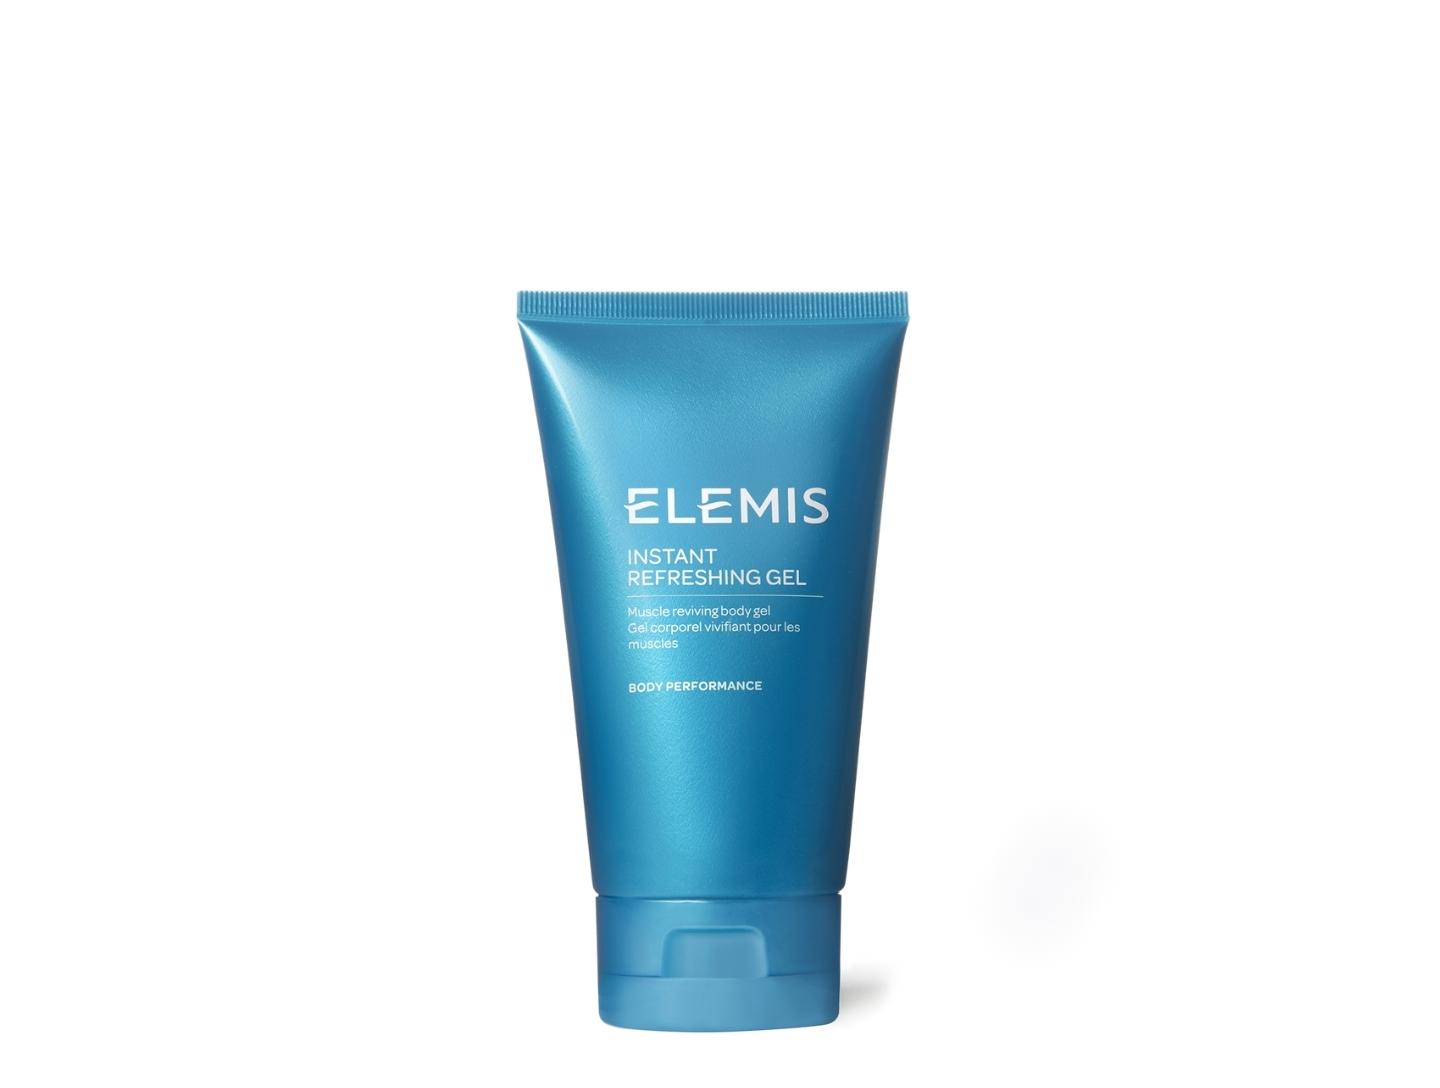 ELEMIS Instant Refreshing Gel 150ml